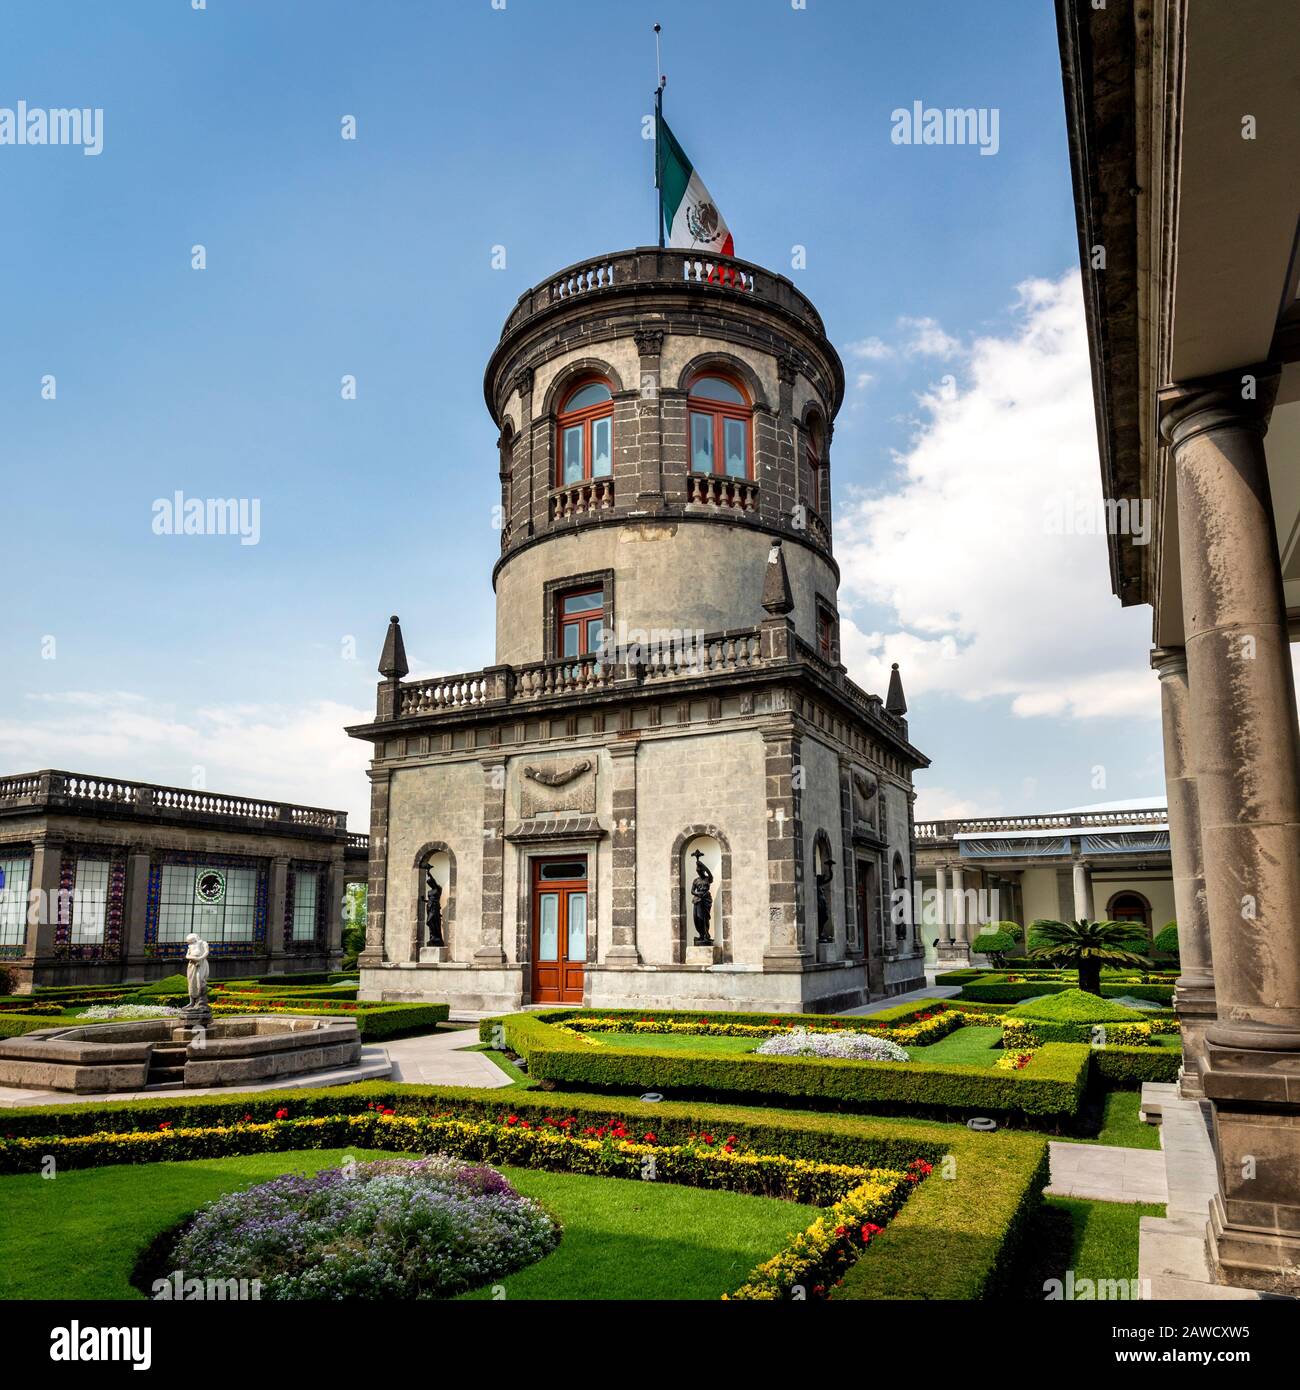 The 'Caballero Alto' tower inside the Castillo de Chapultepec, Mexico City, Mexico. Stock Photo